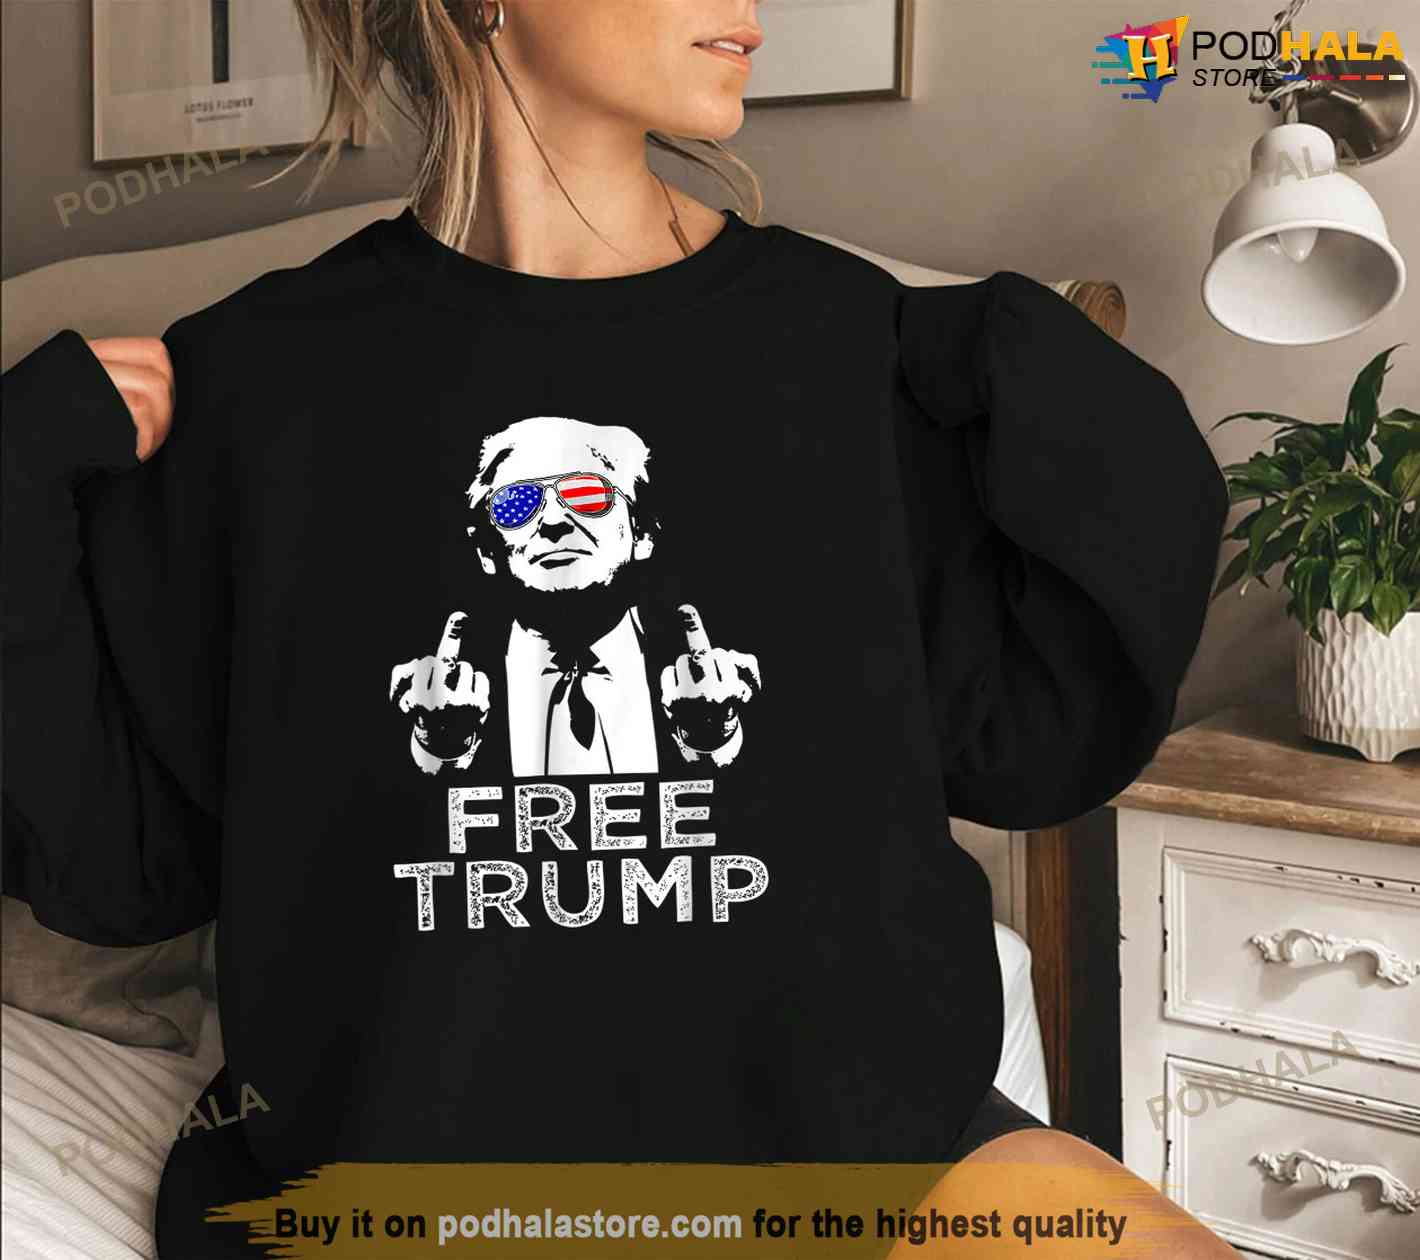 Trump Free Donald Trump T-Shirt, Free Trump Shirt - Bring Your Ideas, Imaginations Into Today